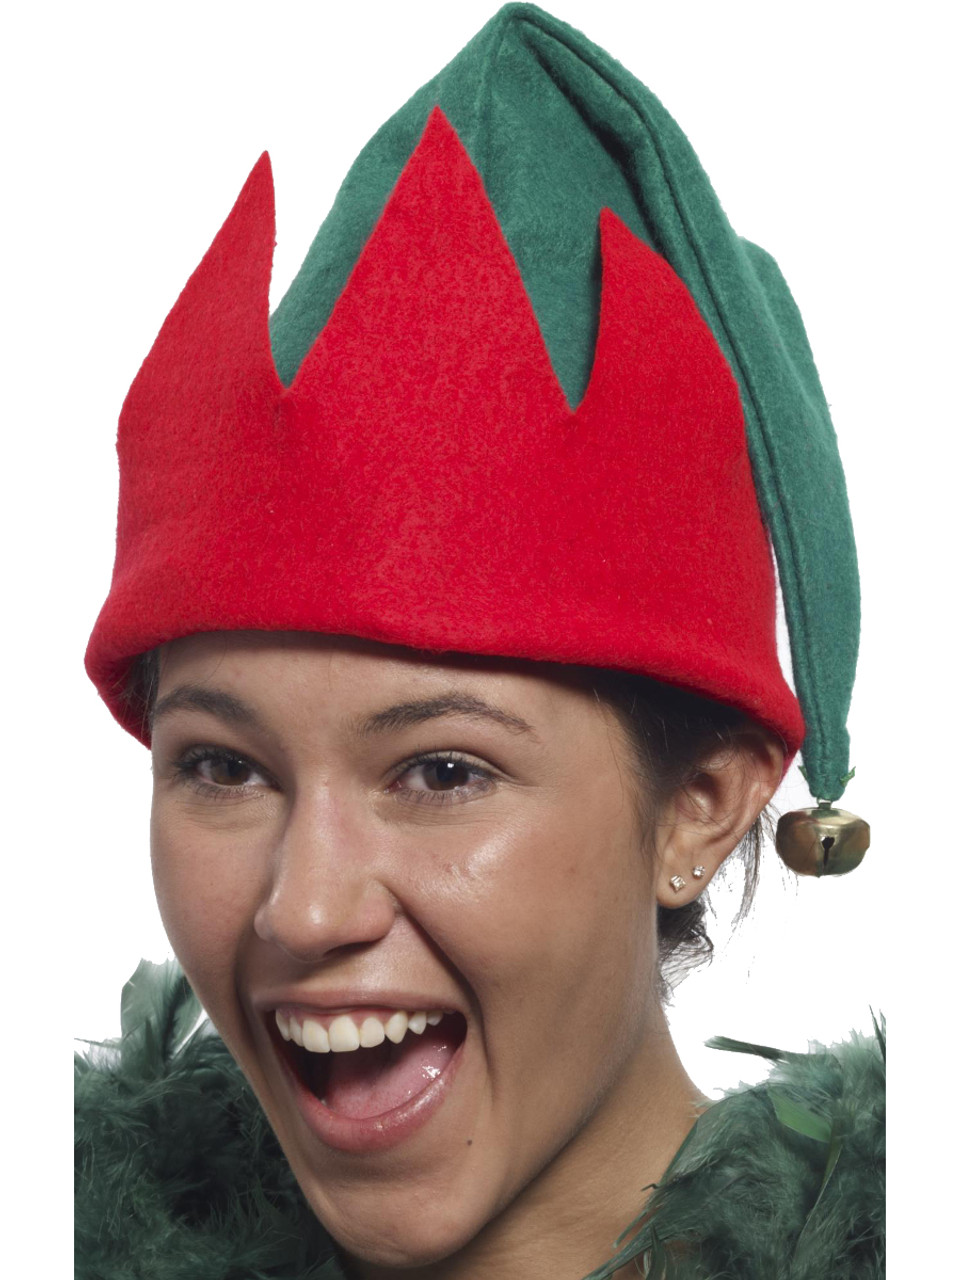 AC262 Mini Elf Hat on Headband Santa Helper Christmas Xmas Costume Accessory 